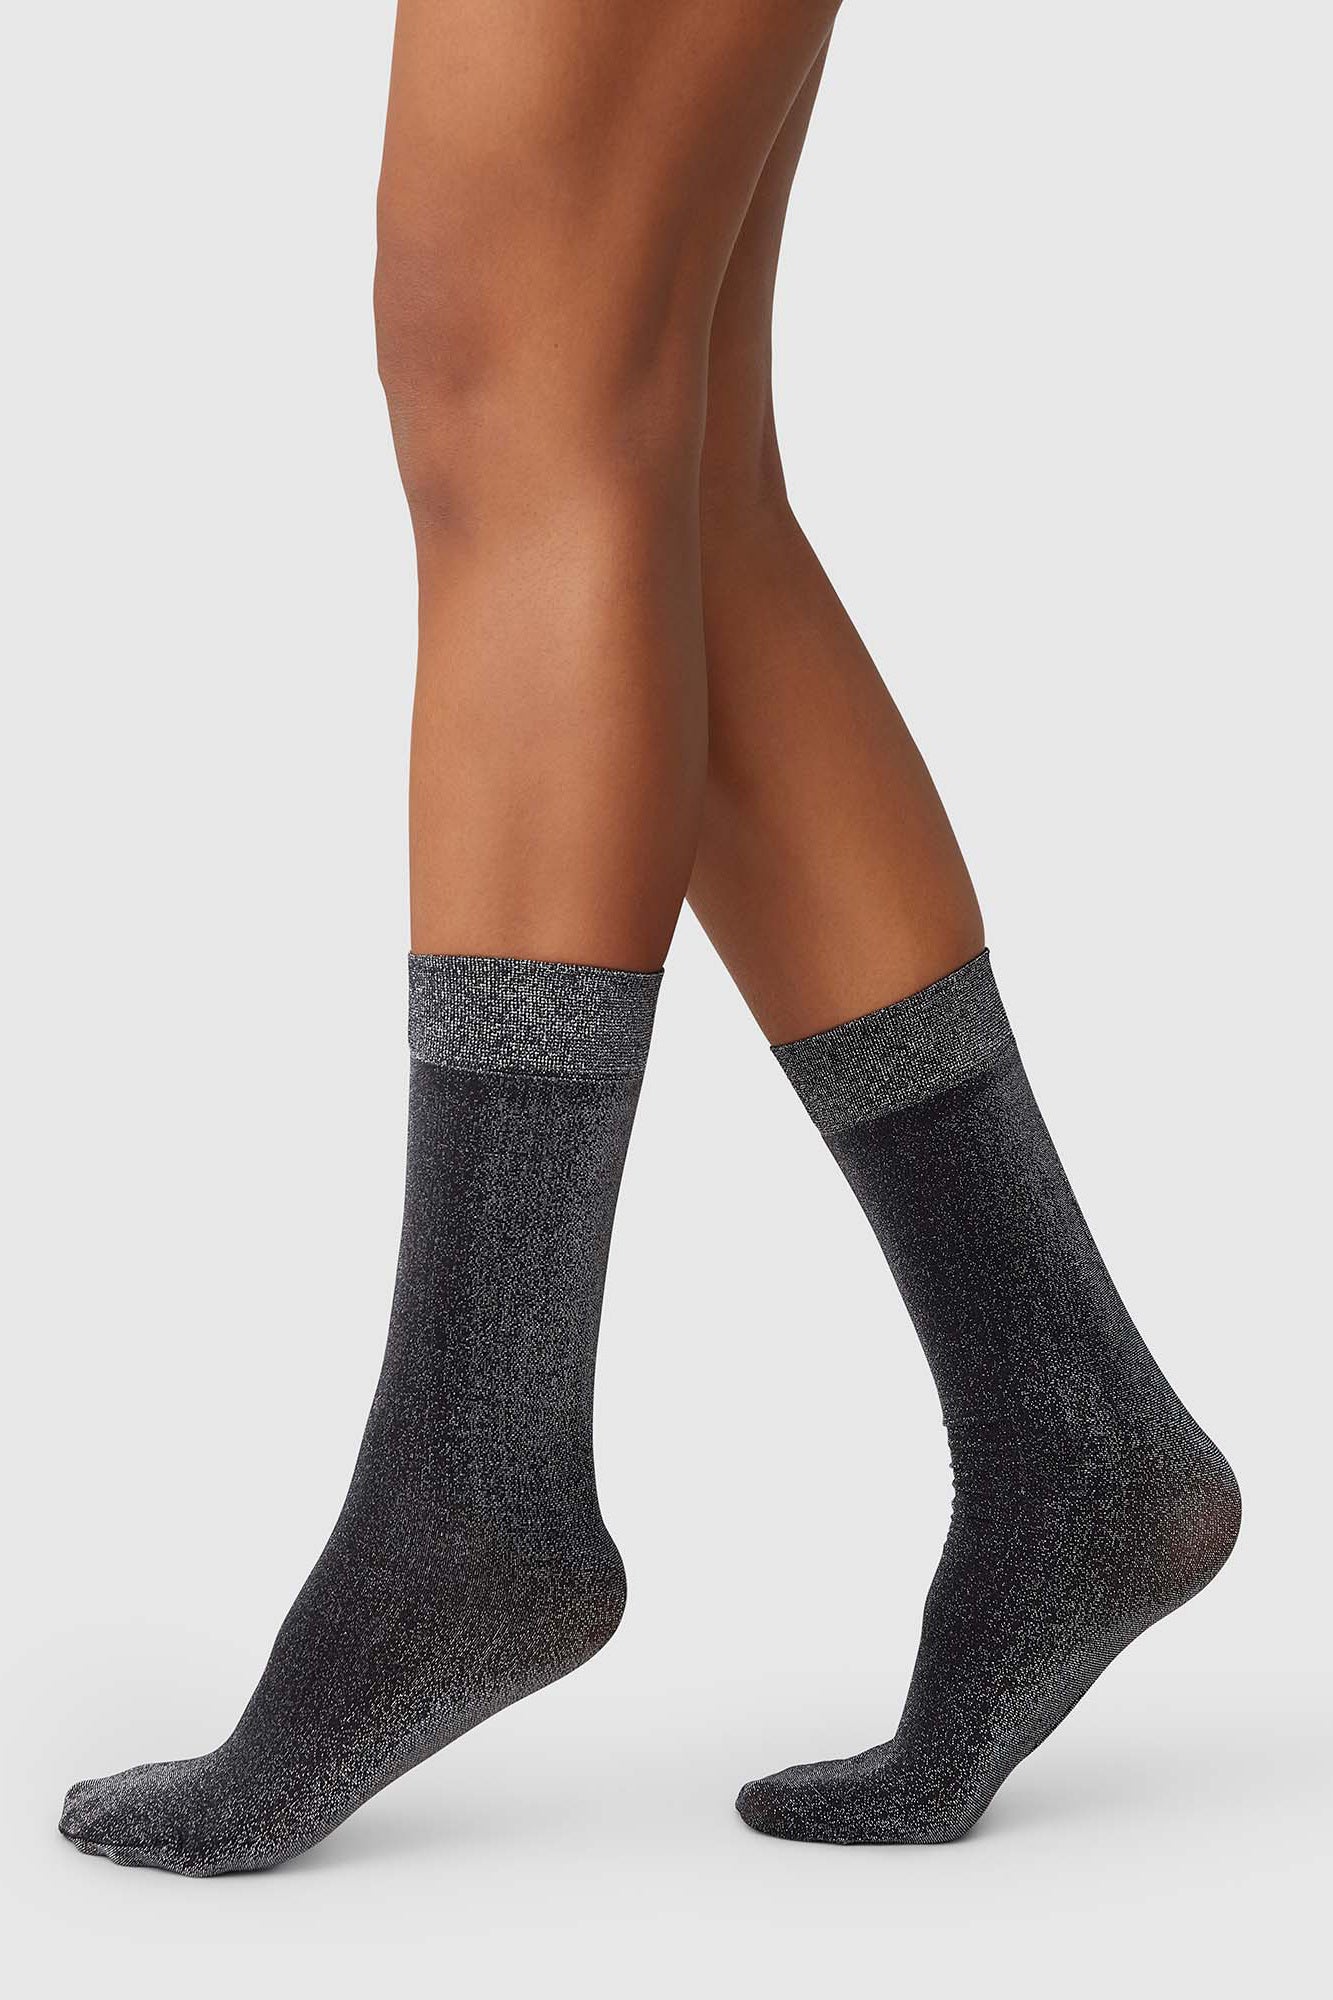 Swedish Stockings Ines Shimmery Socks - Black - RUM Amsterdam